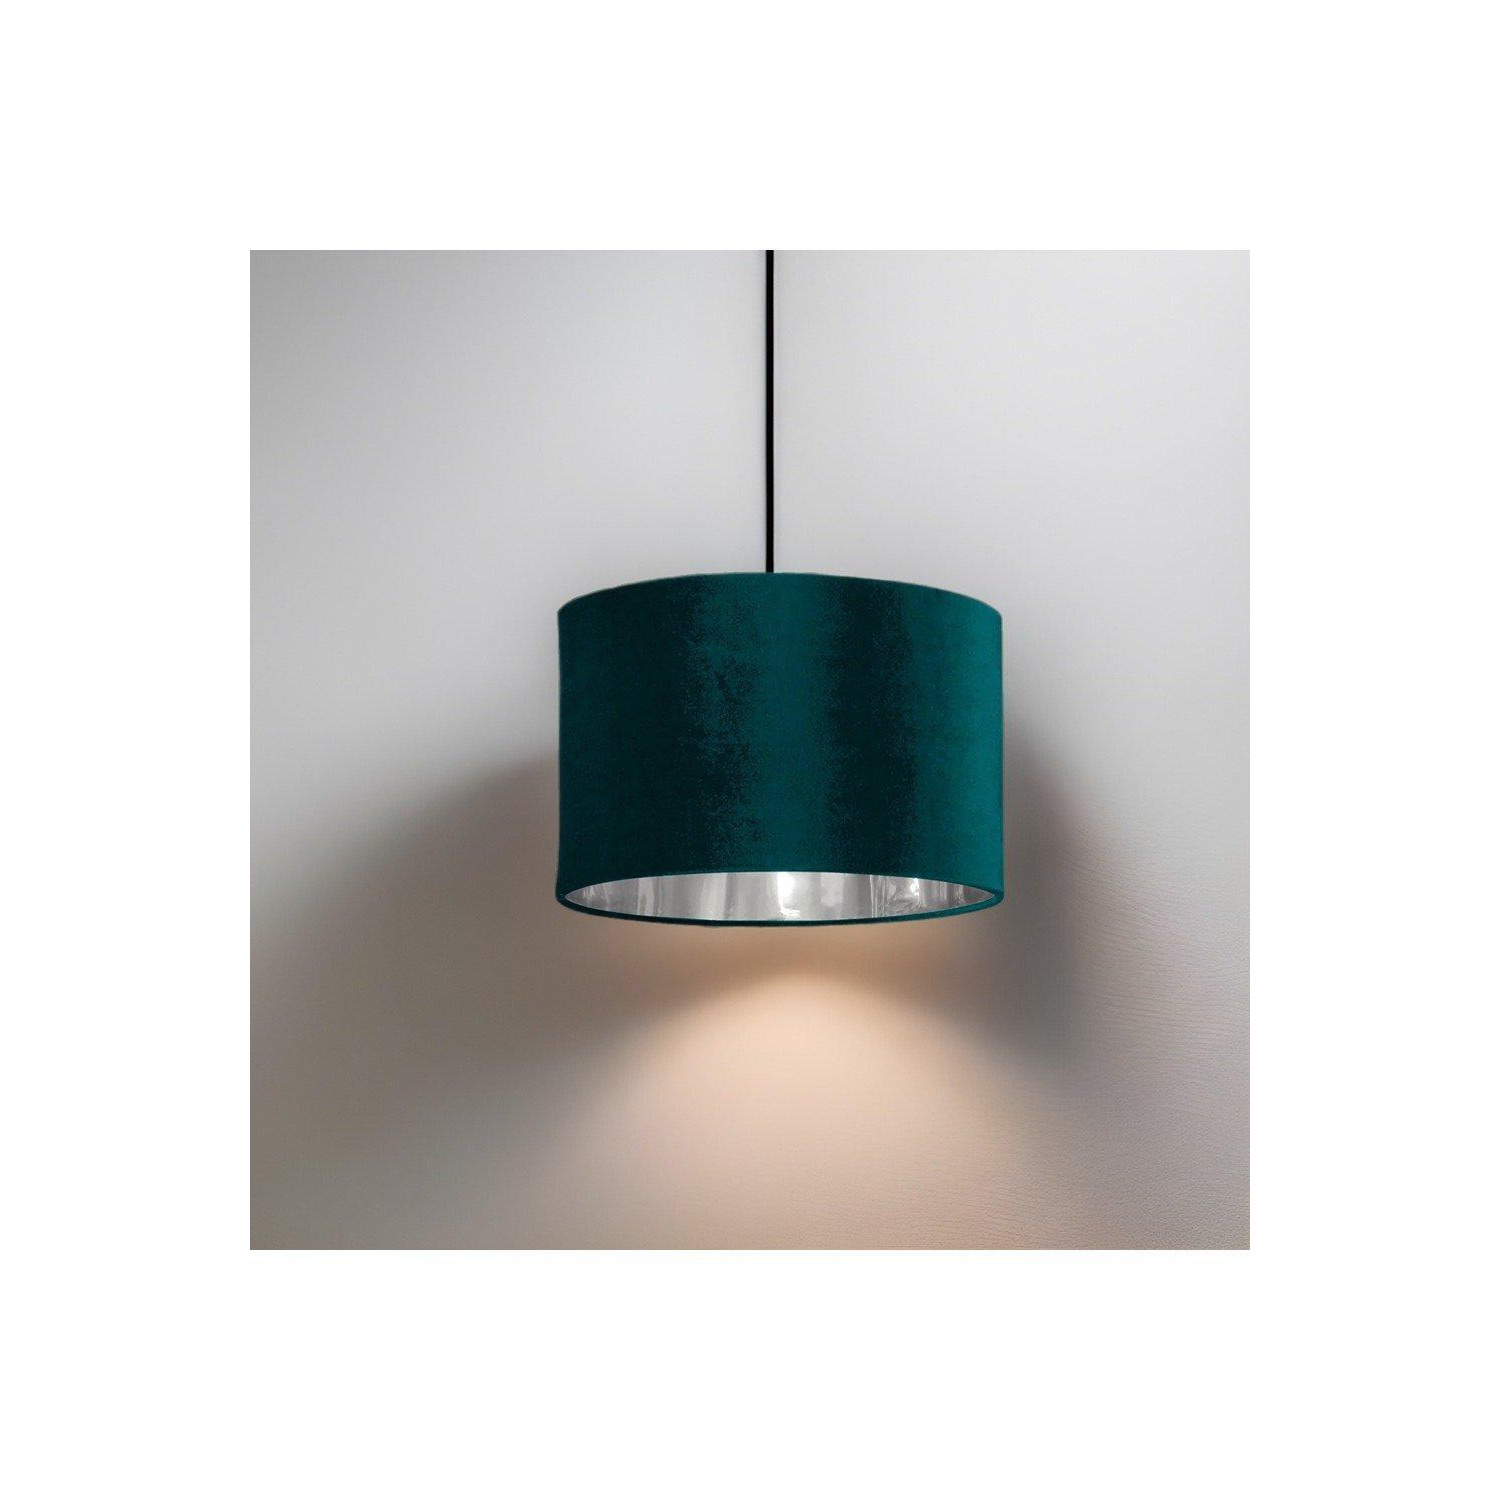 'Nila' Luxury Teal Velvet & Silver Round Pendant Drum Ceiling Lamp Shade - image 1